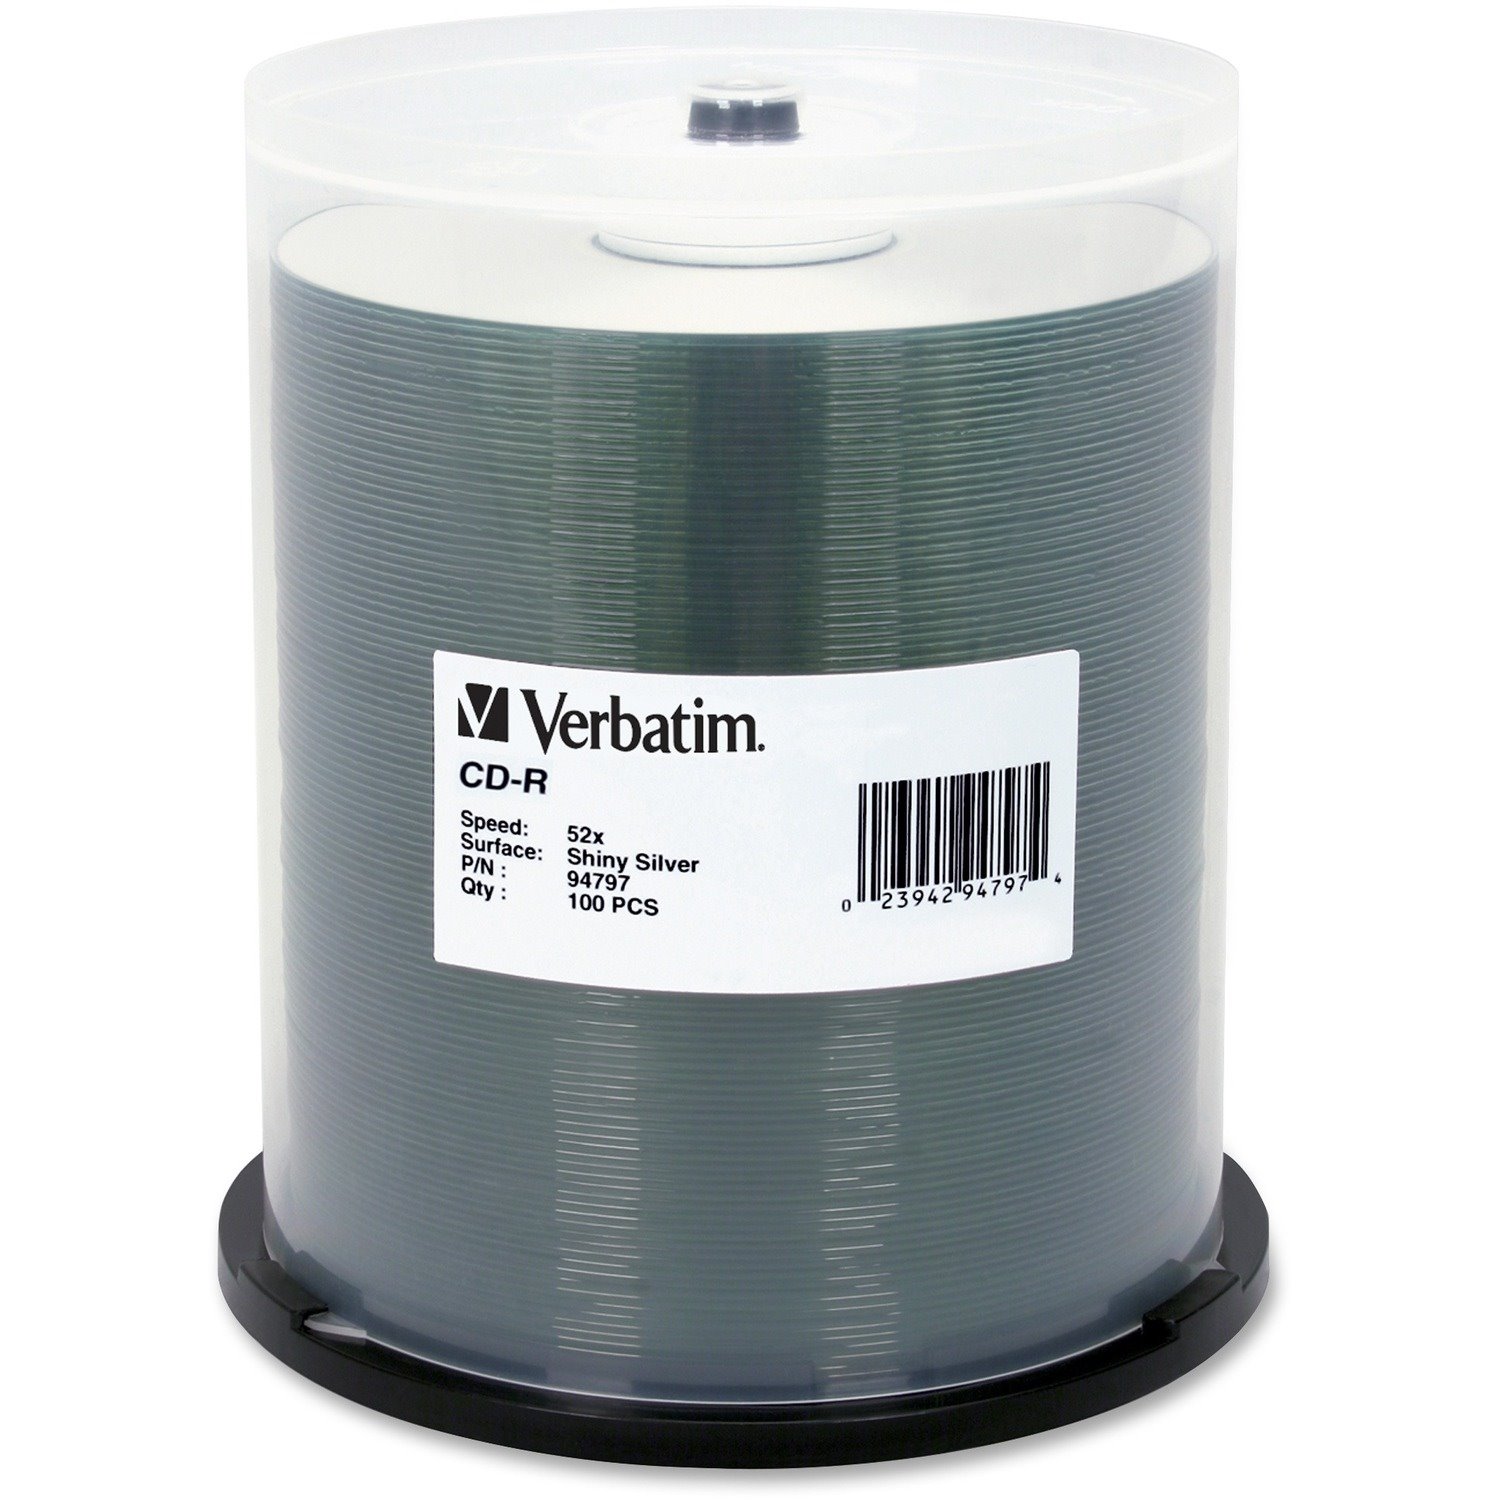 Verbatim CD-R 700MB 52X DataLifePlus Shiny Silver Silk Screen Printable - 100pk Spindle